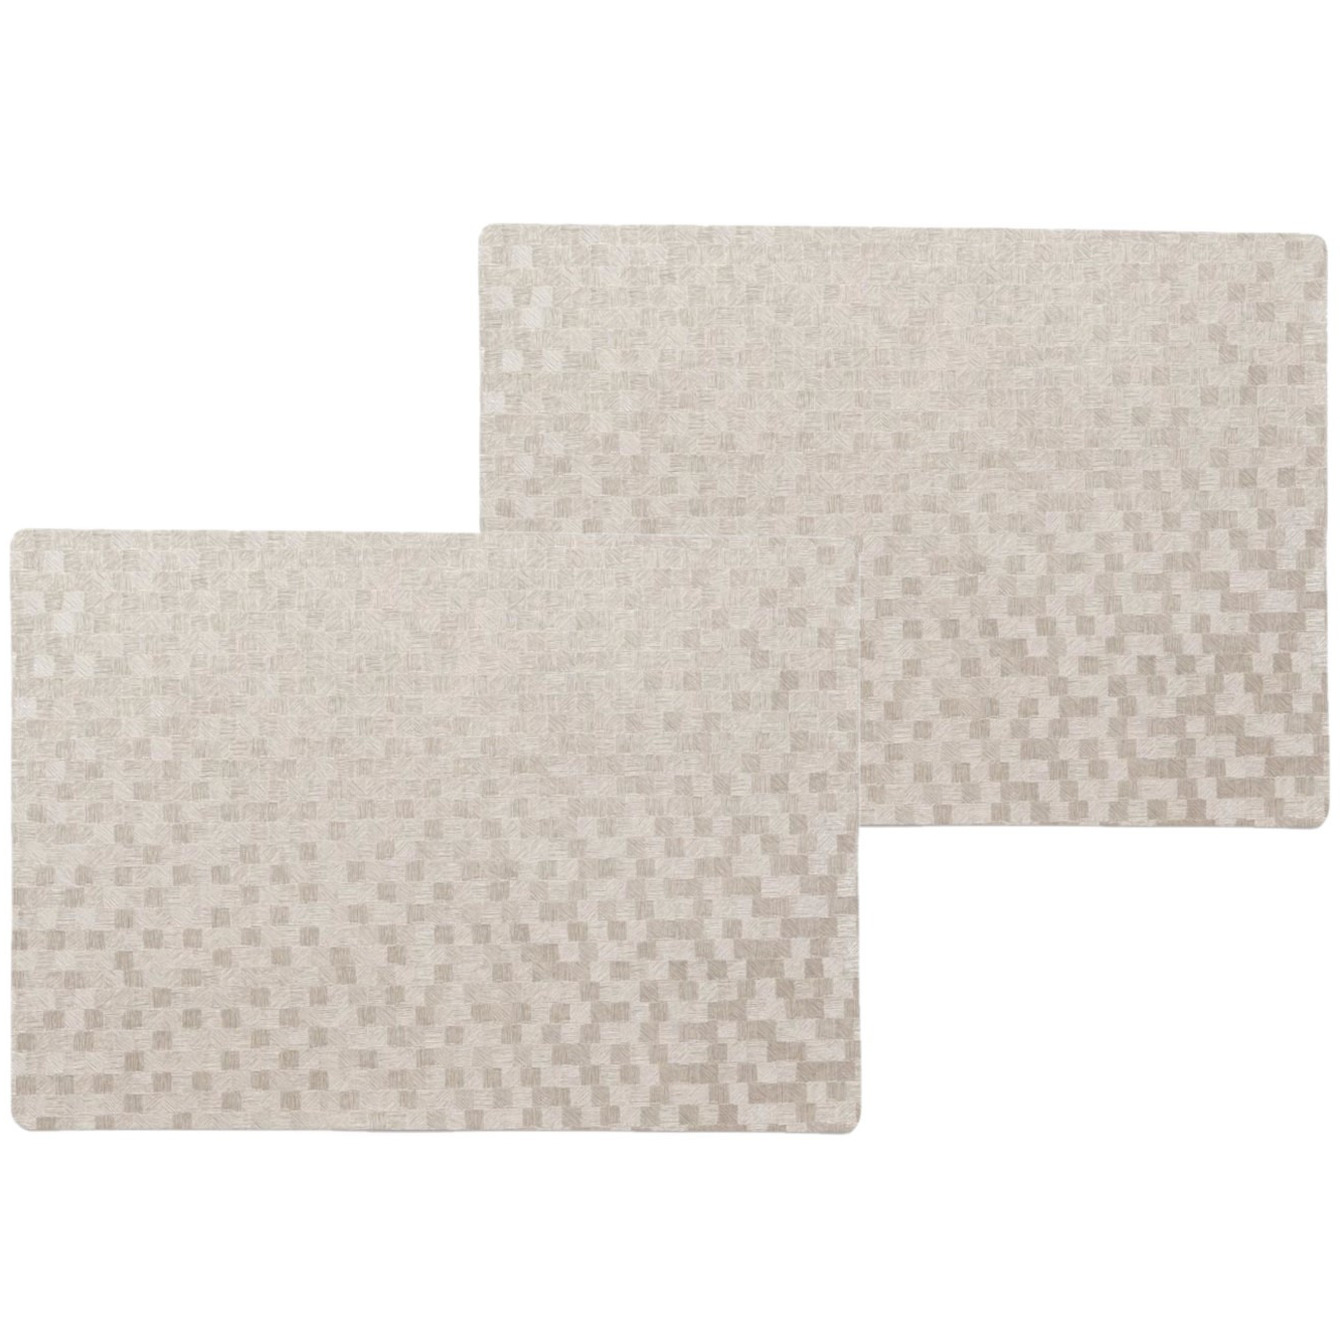 Wicotex 12x stuks stevige luxe Tafel placemats Stones taupe 30 x 43 cm -